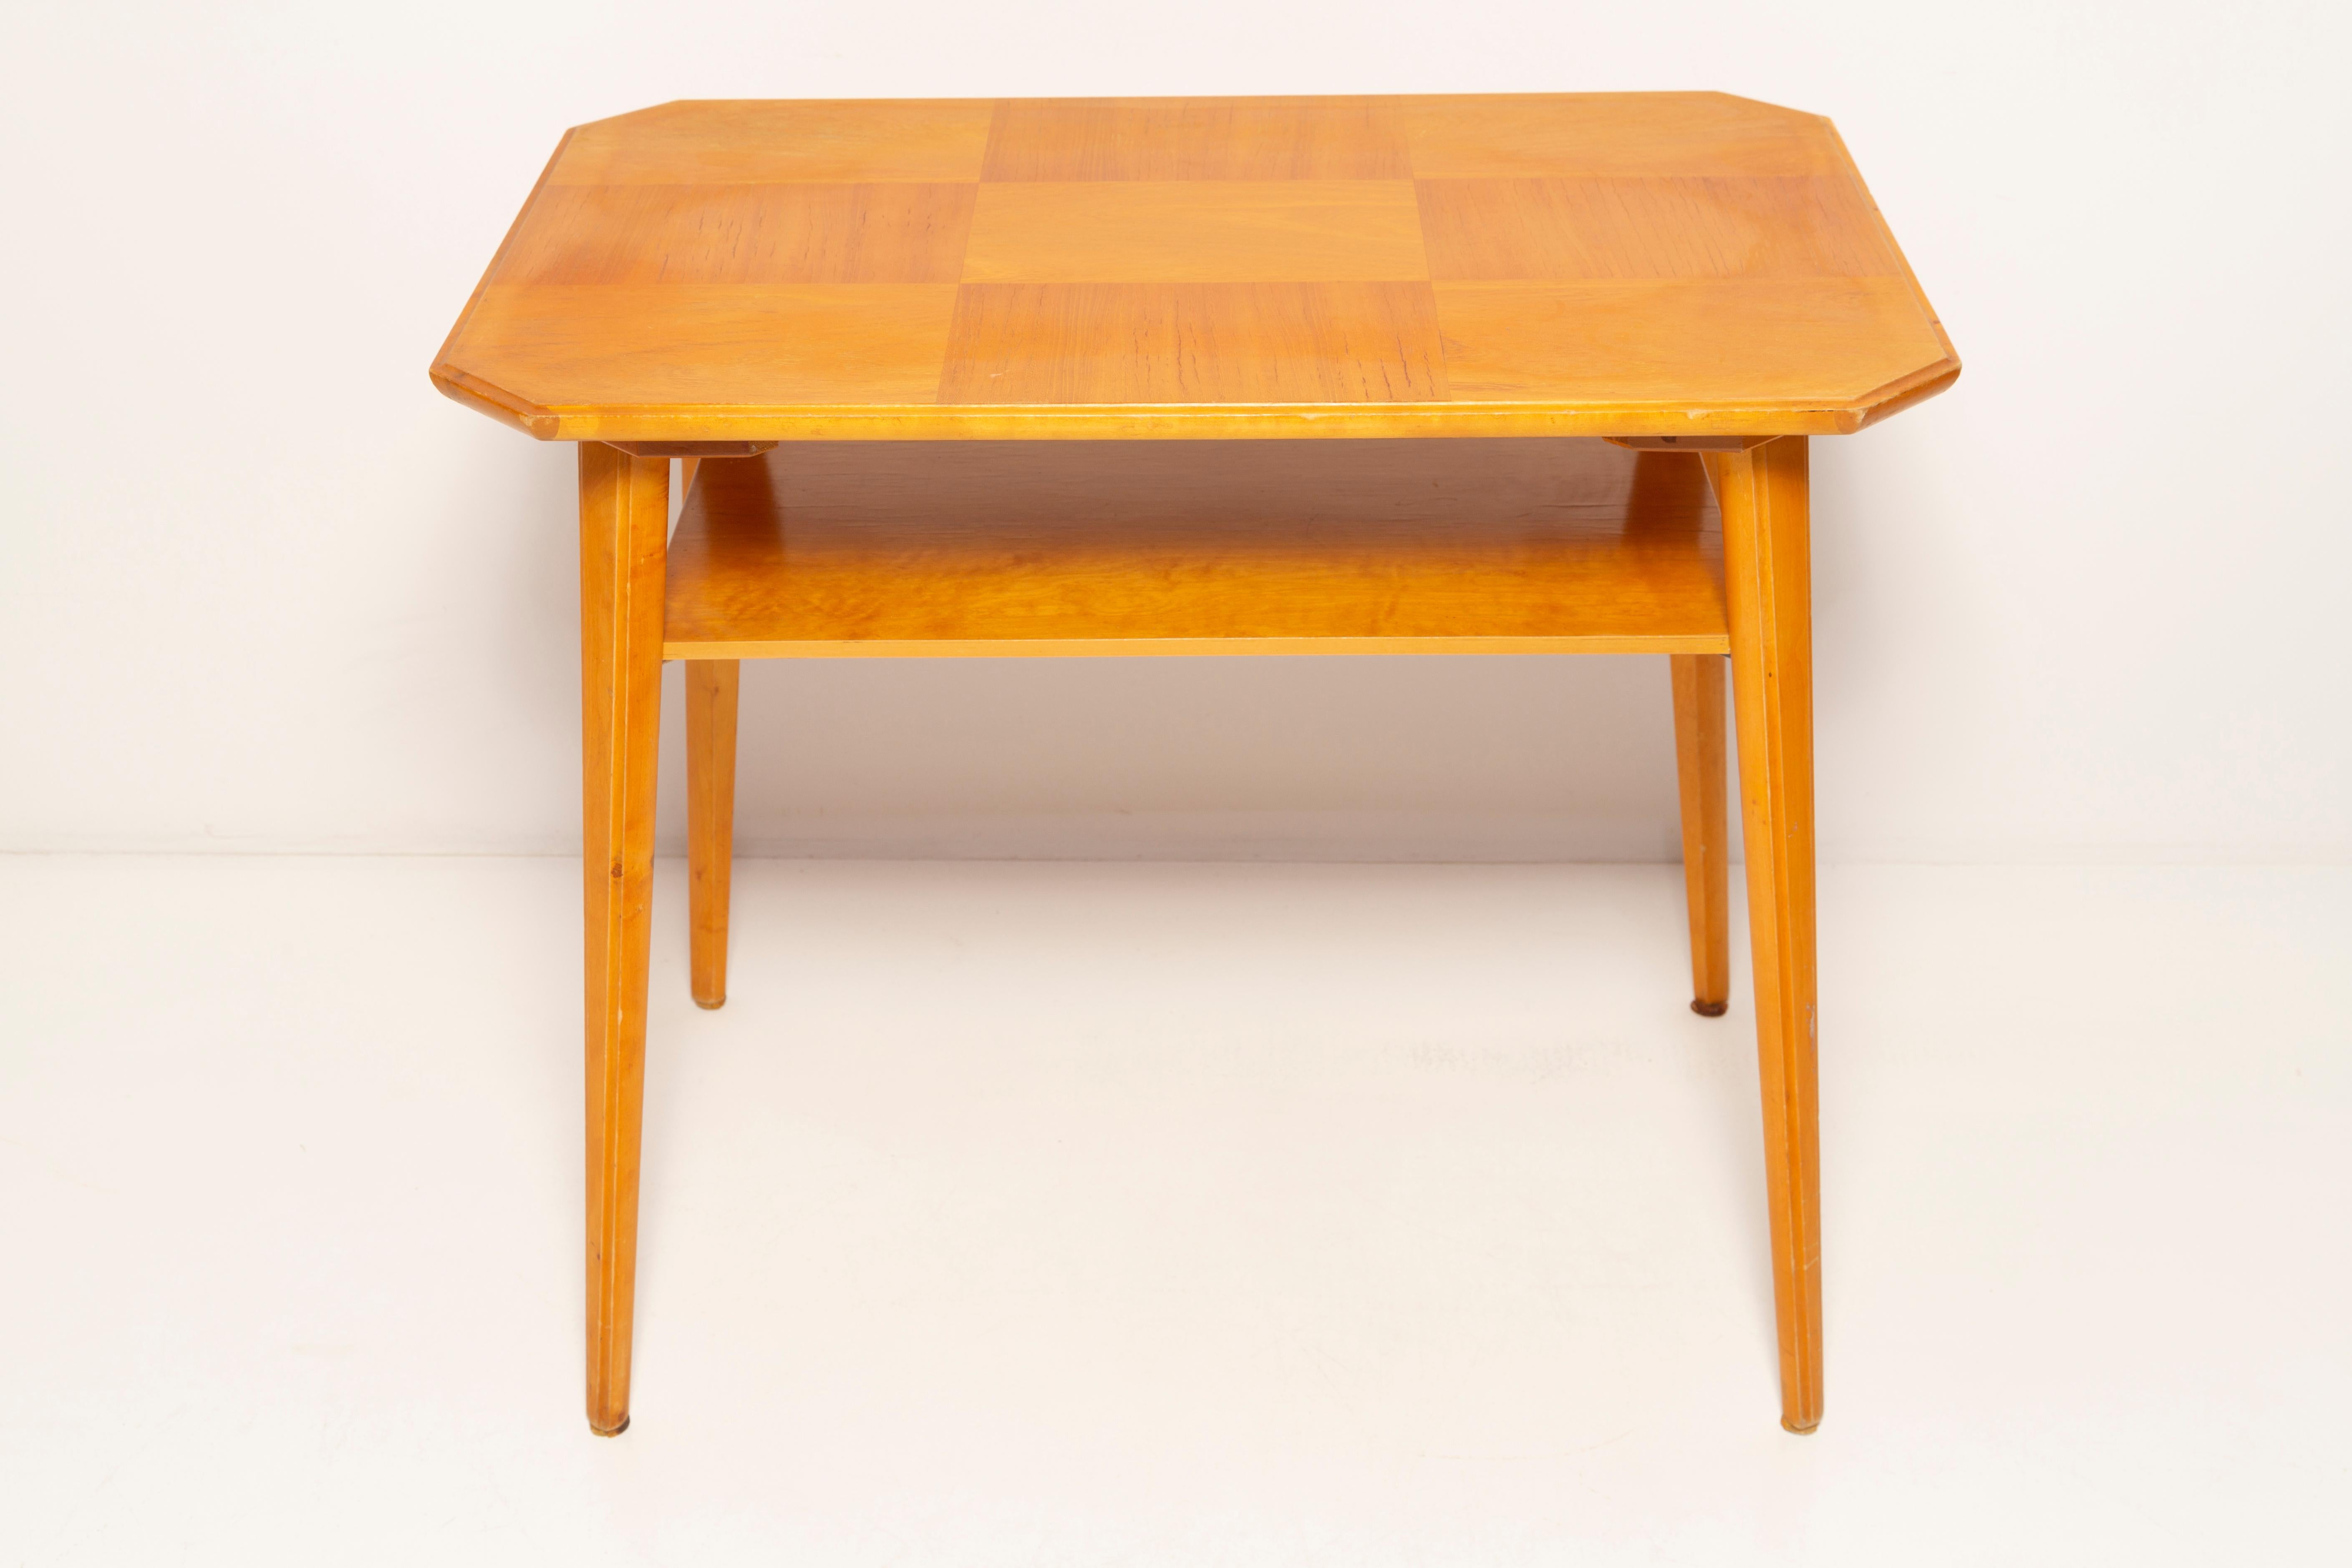 Polish Mid-Century Modern Coffee Table, Light Wood, Europe, 1960s For Sale